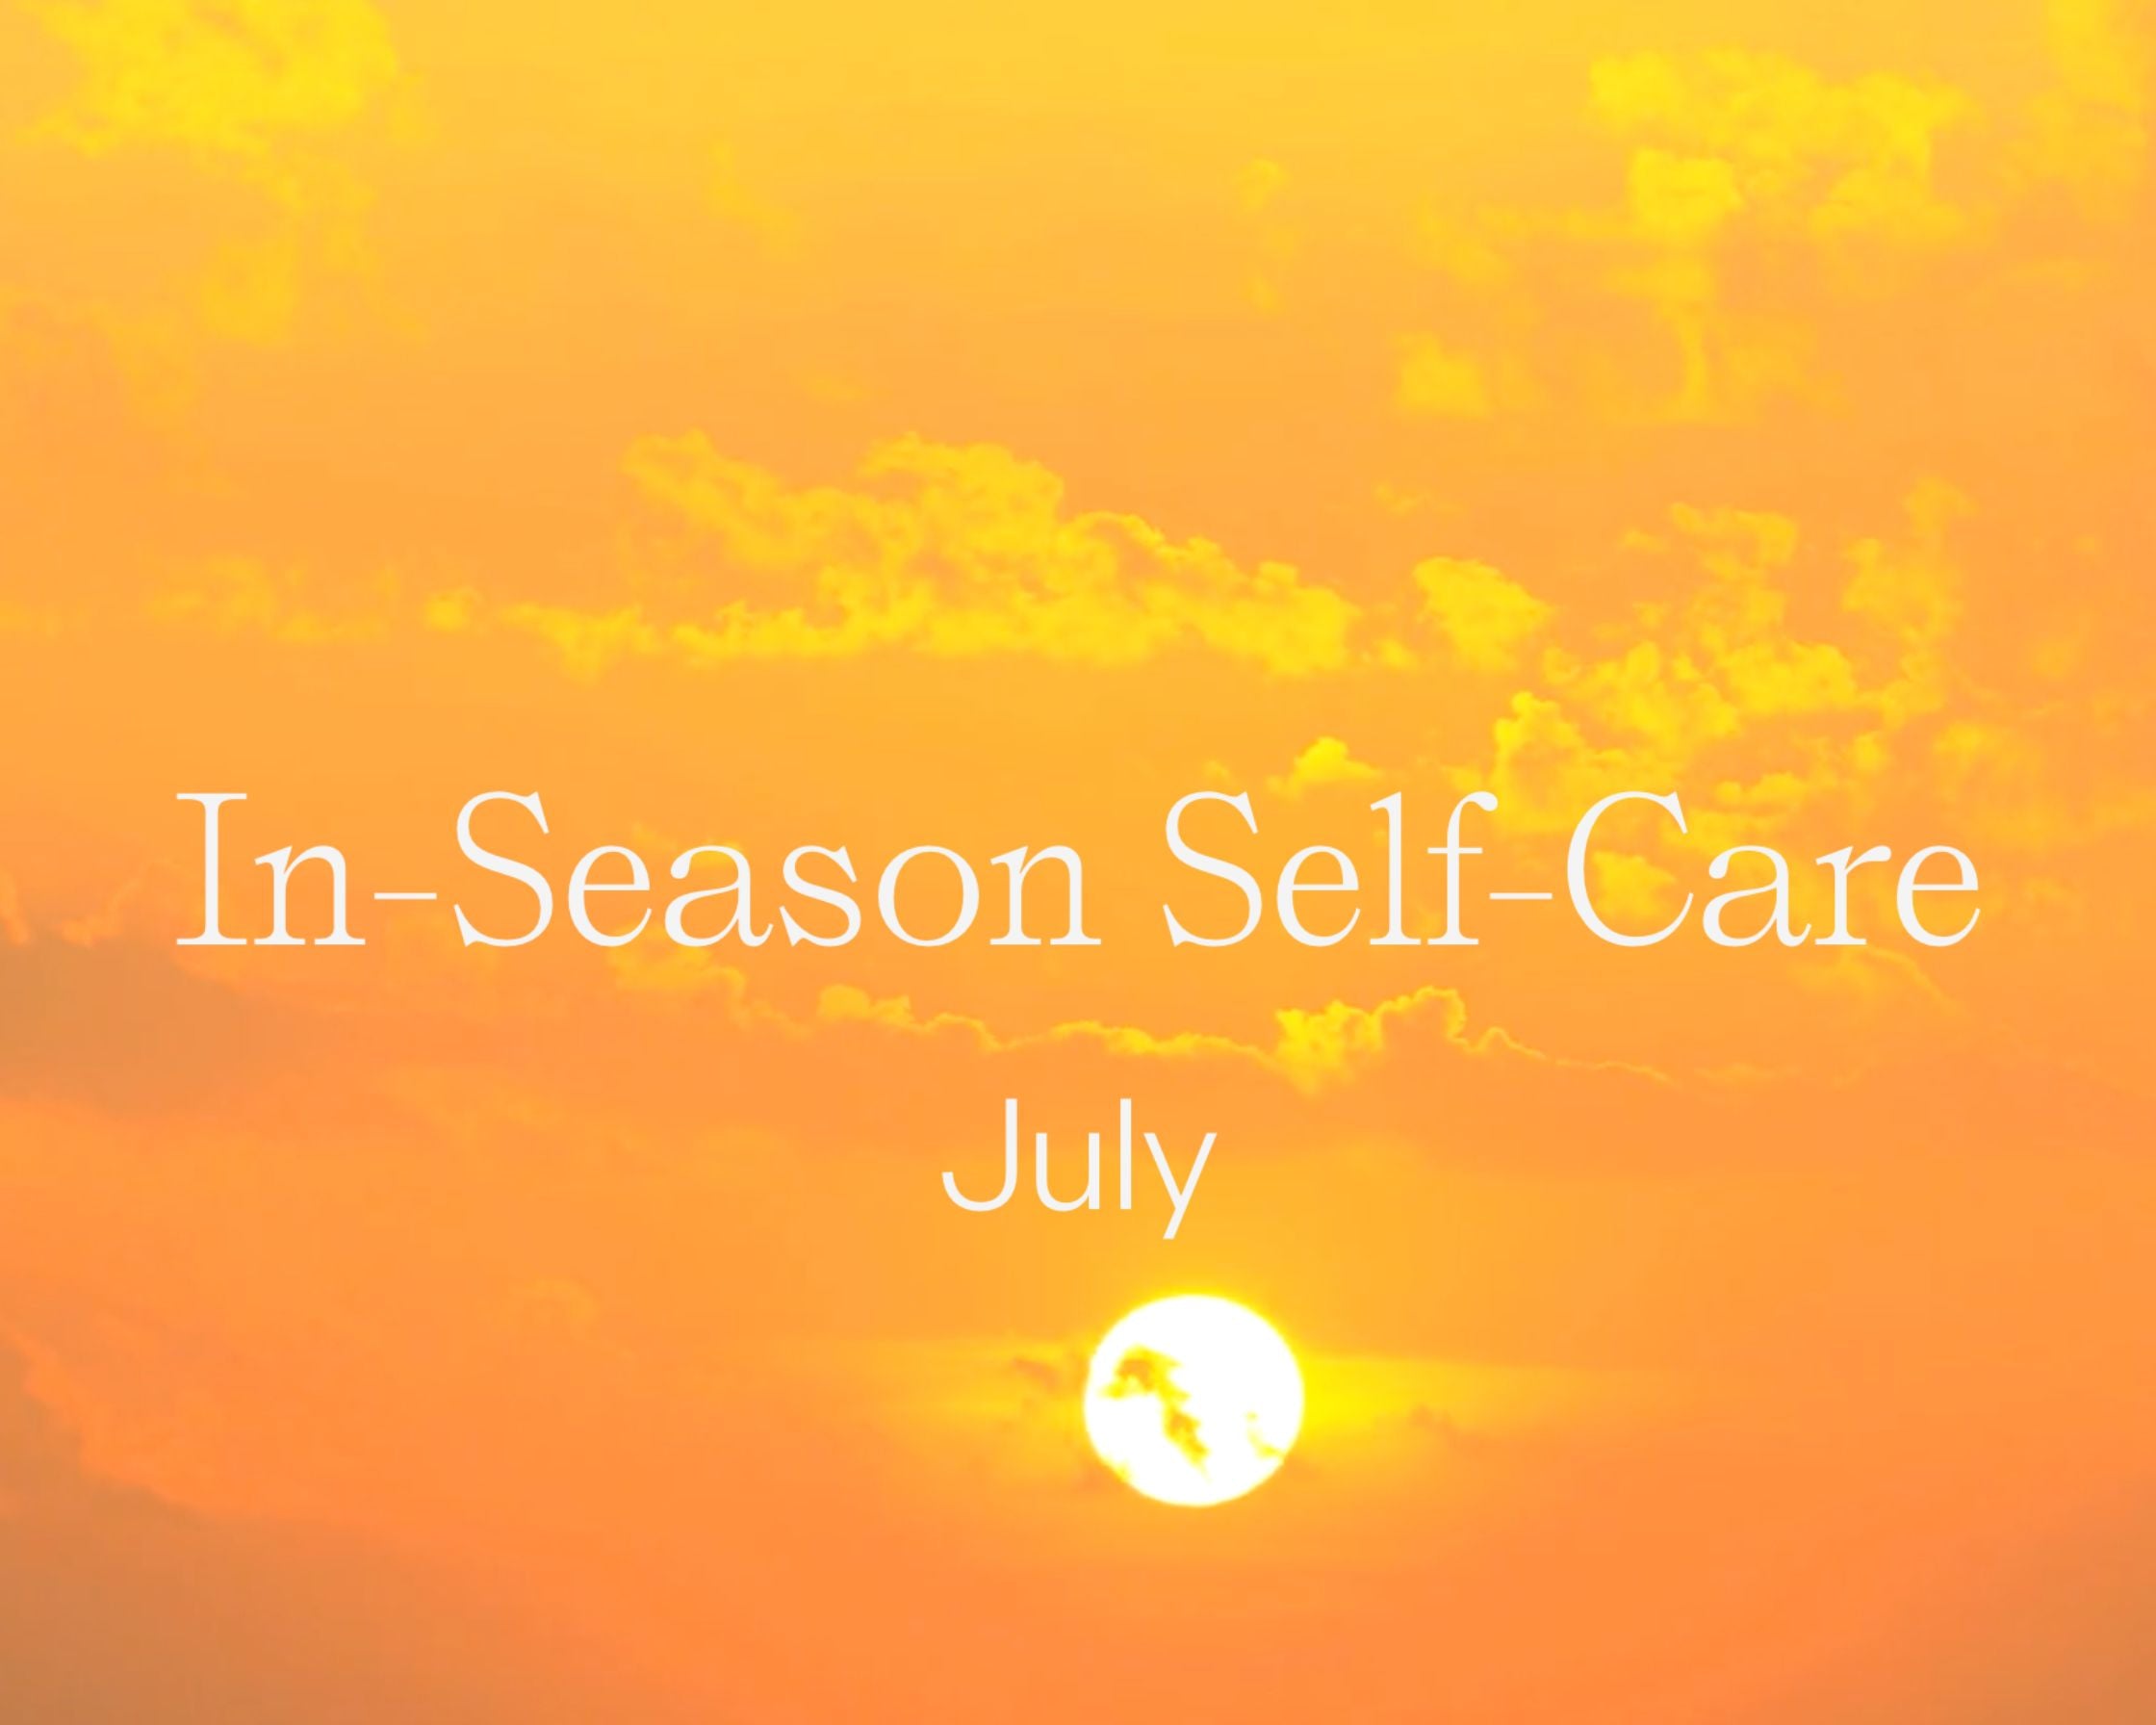 In Season Self-Care: July